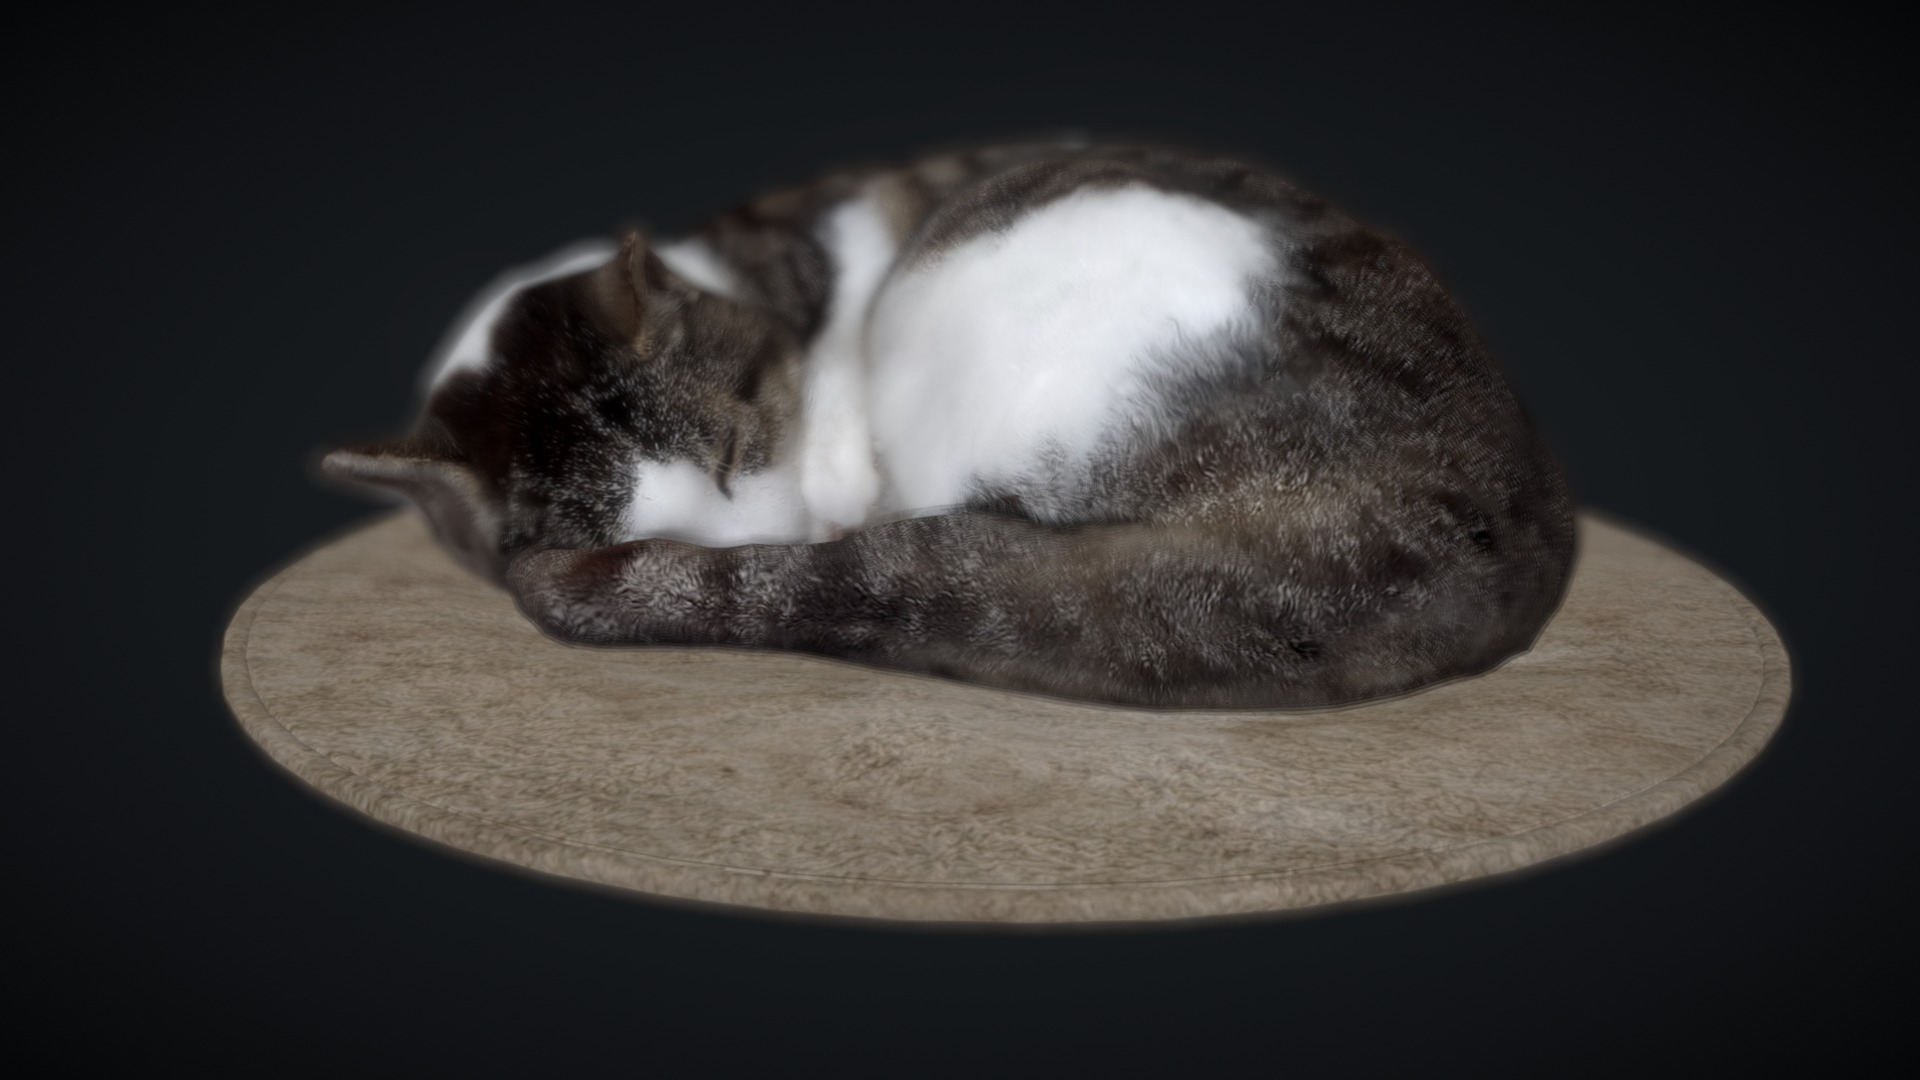 3D model Sleeping on a mat cat - This is a 3D model of the Sleeping on a mat cat. The 3D model is about a cat sleeping on a plate.